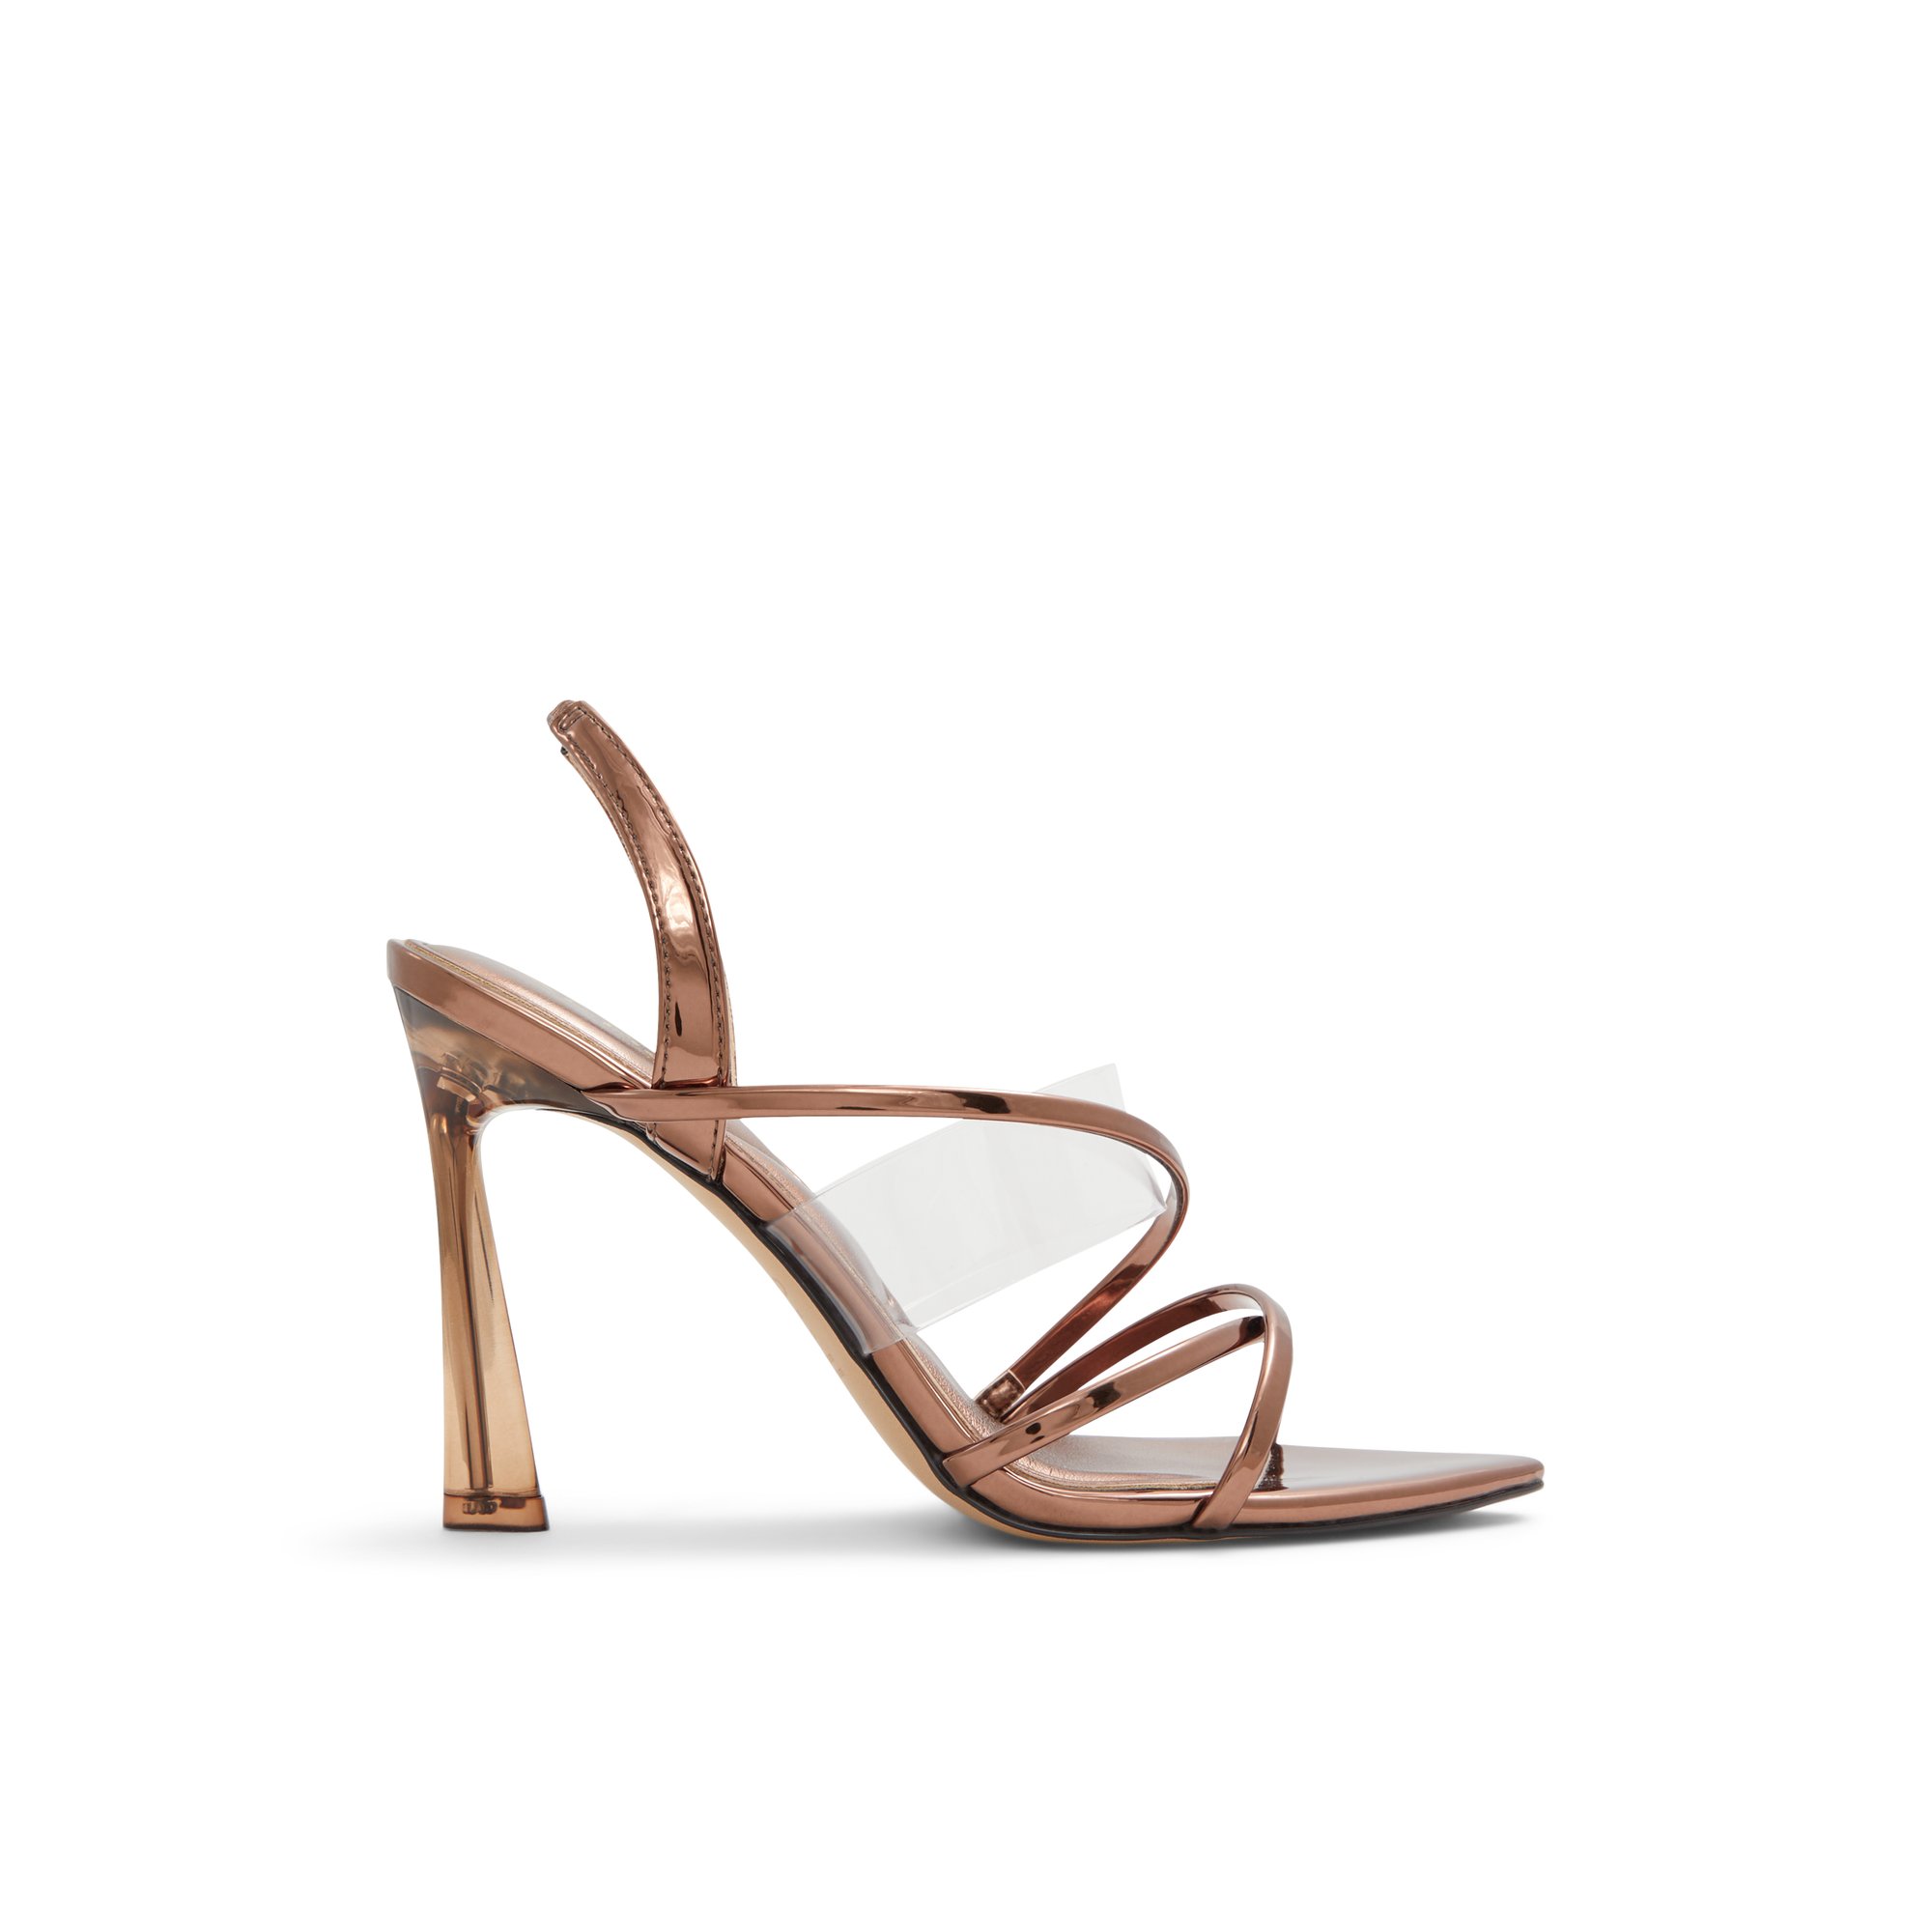 ALDO Merengue - Women's Strappy Sandal Sandals - Brown